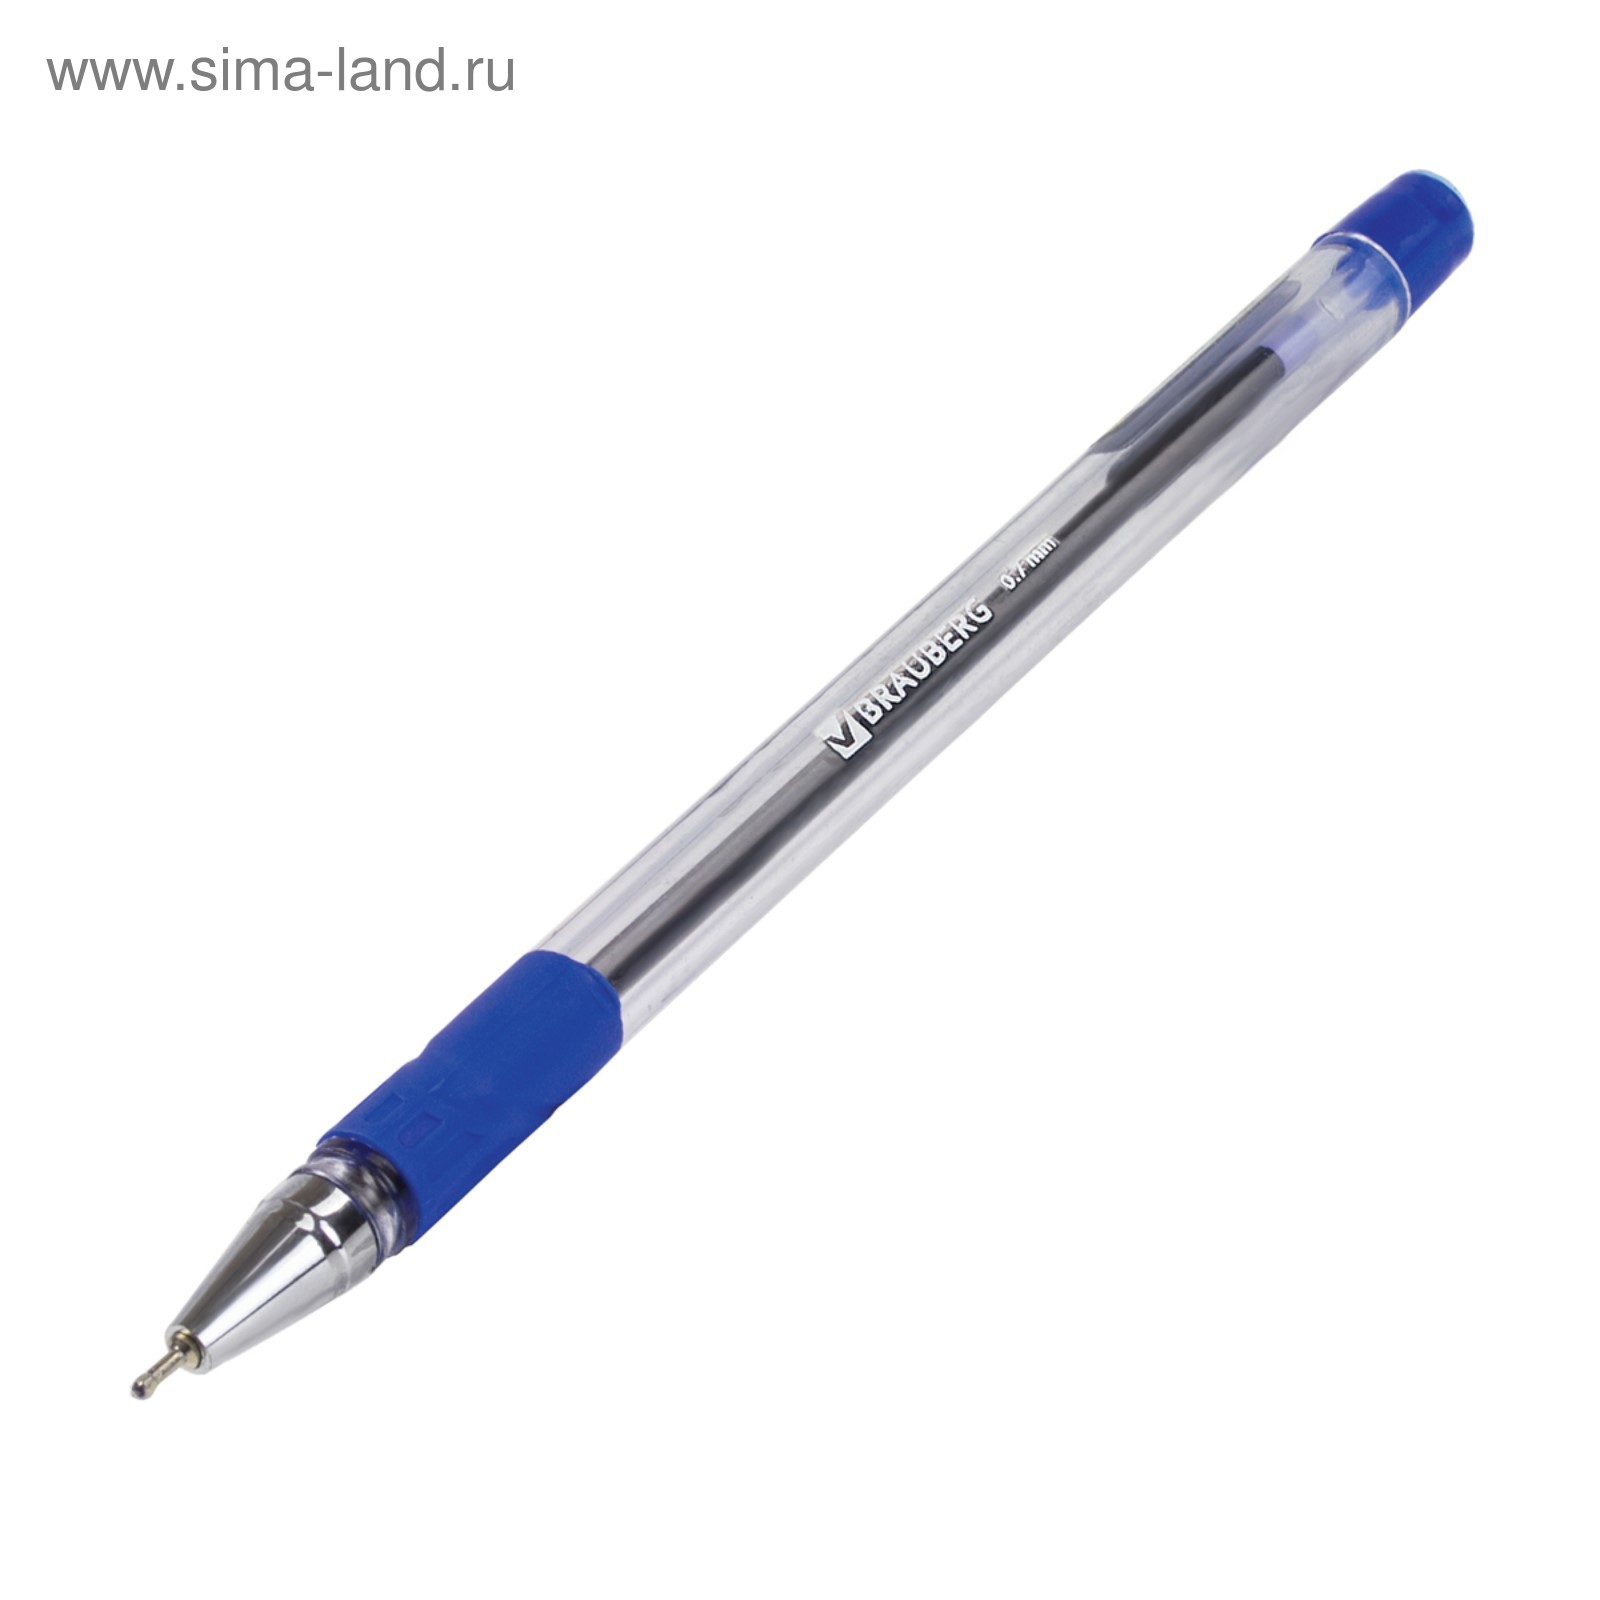 Brauberg 0.7. Ручка шариковая БРАУБЕРГ. Ручка шариковая синяя БРАУБЕРГ. Ручка BRAUBERG 0.7. Ручка шариковая БРАУБЕРГ 0.7.